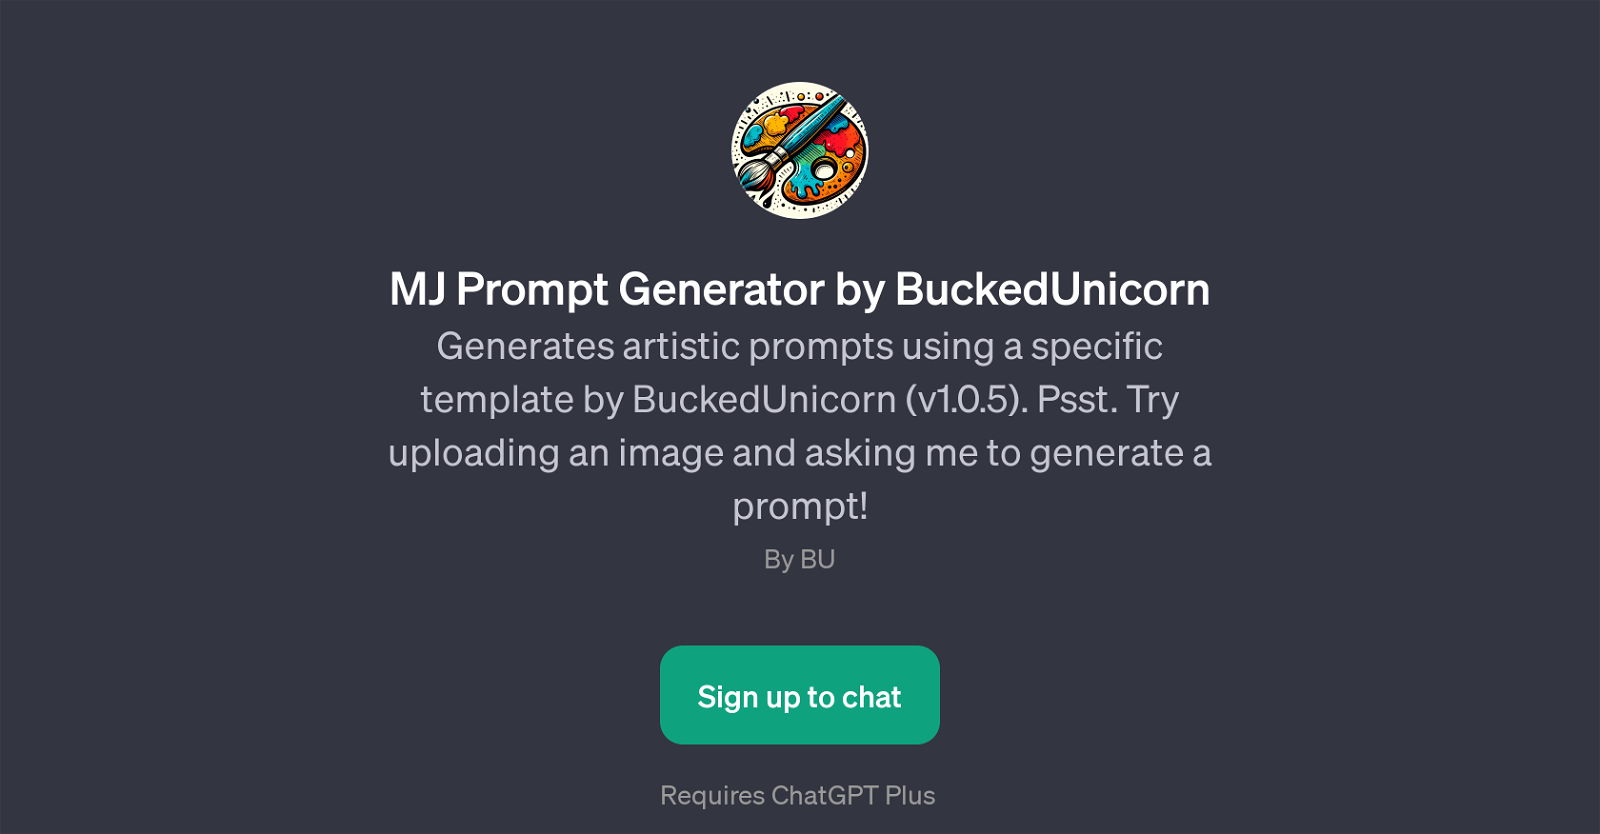 MJ Prompt Generator by BuckedUnicorn website